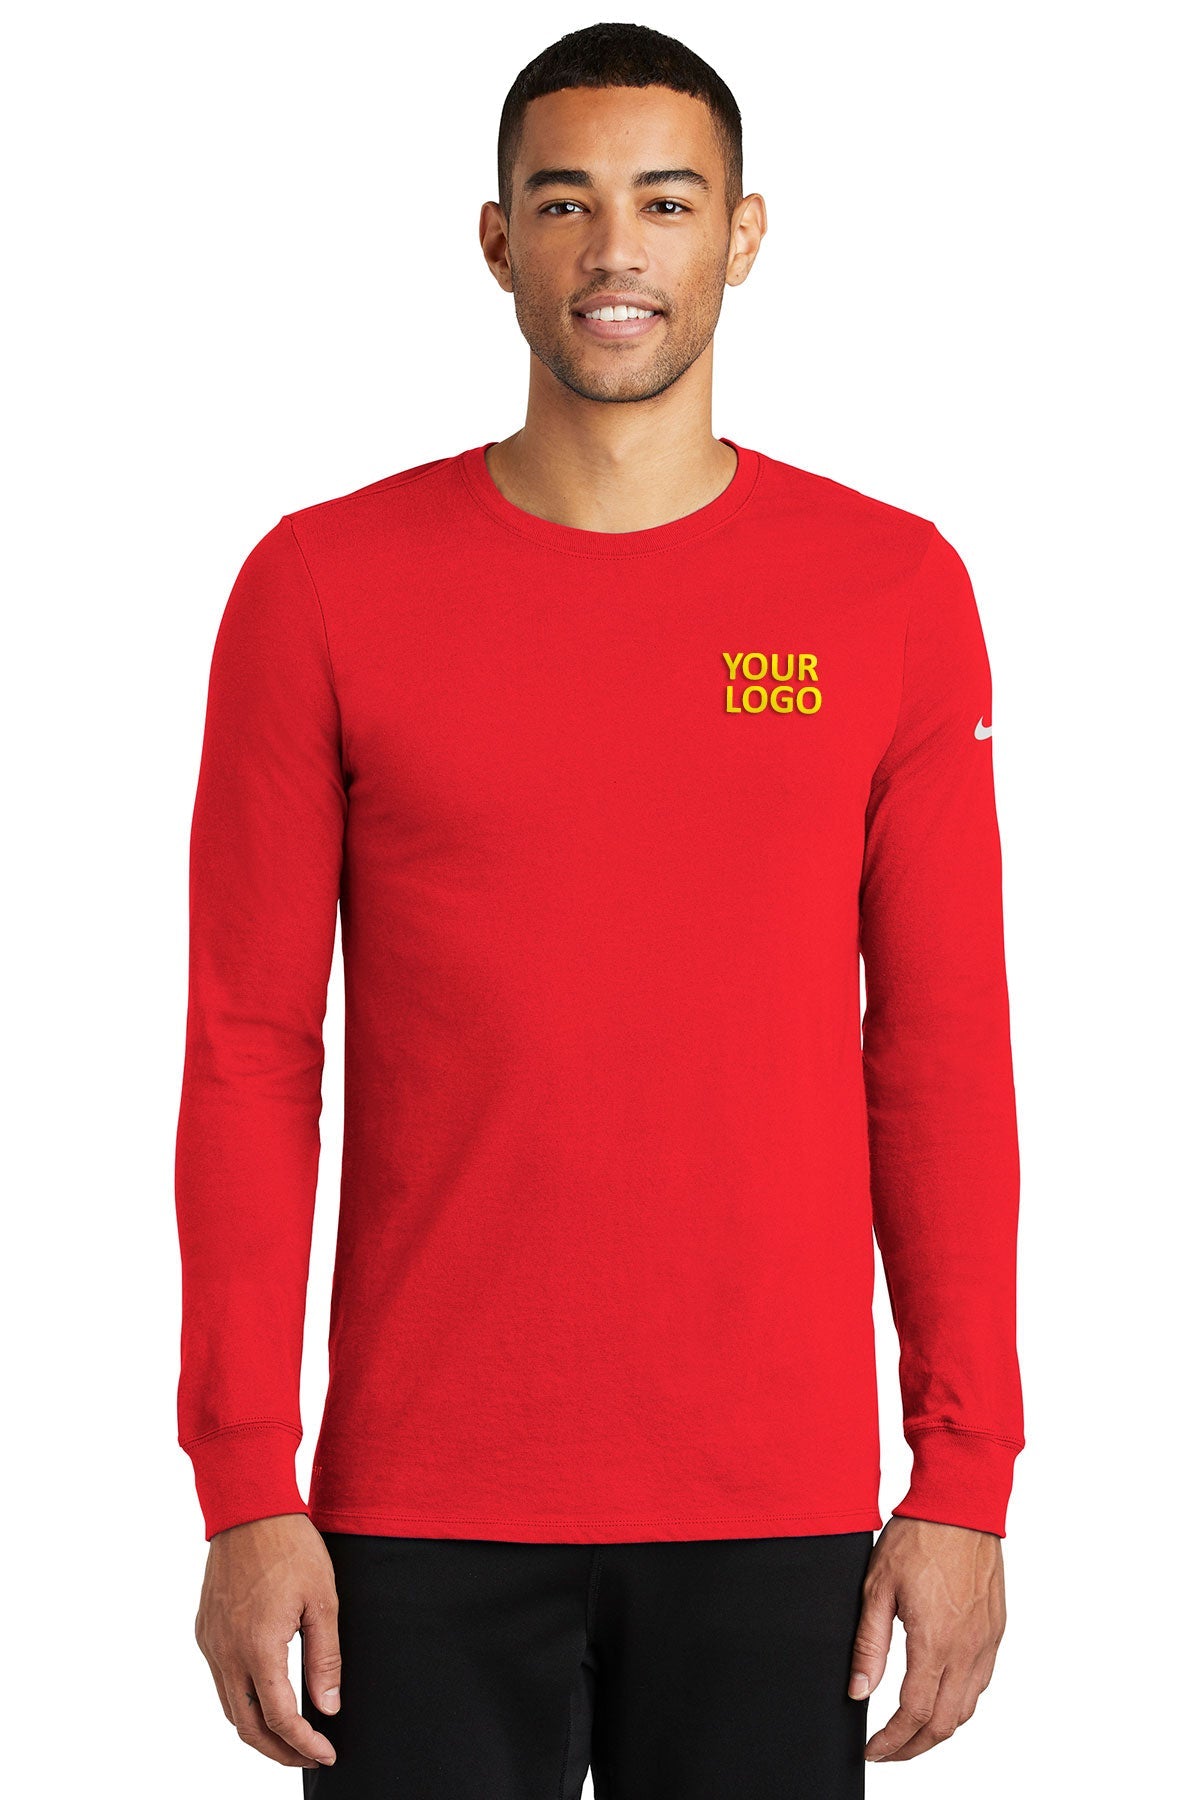 nike-dri-fit-cotton-poly-long-sleeve-tee-nkbq5230-university-red